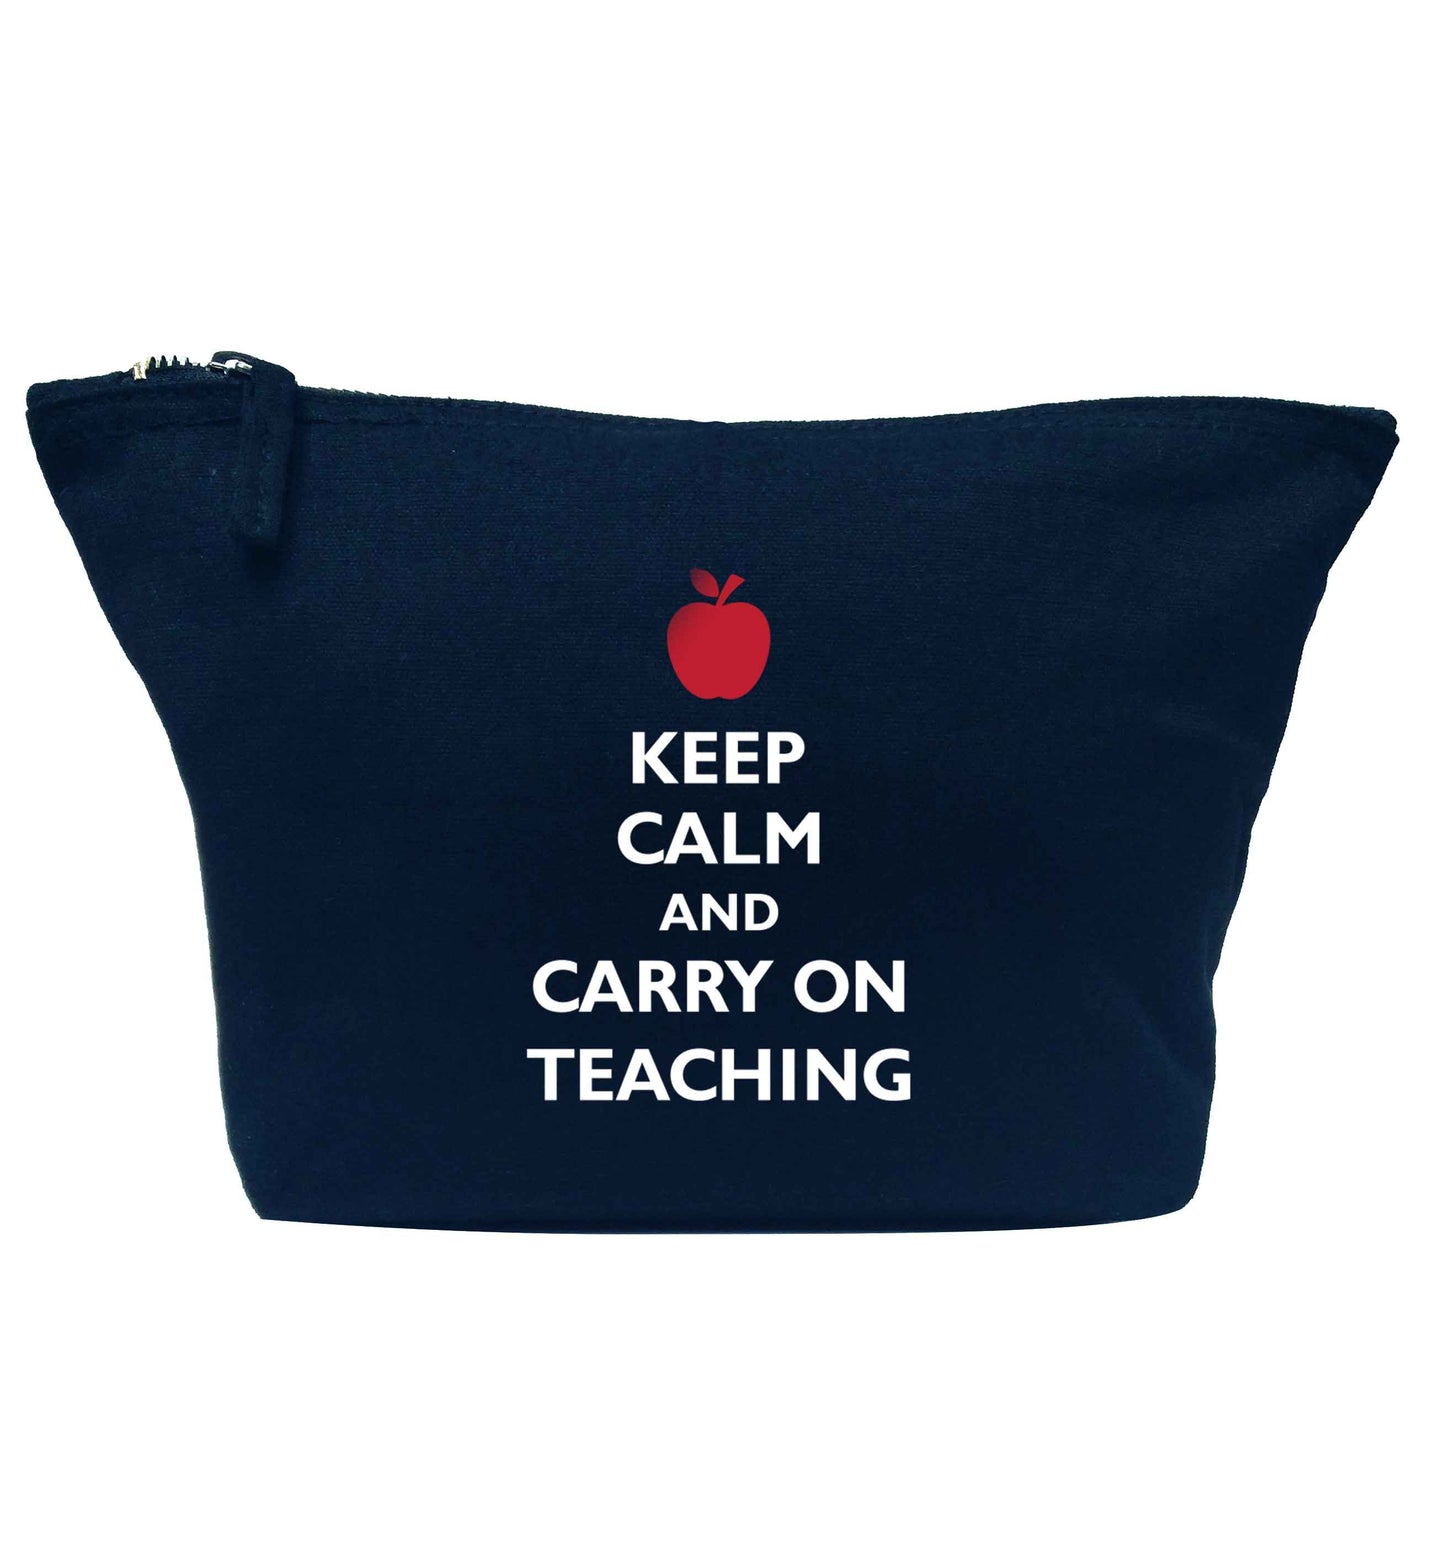 Keep calm and carry on teaching navy makeup bag